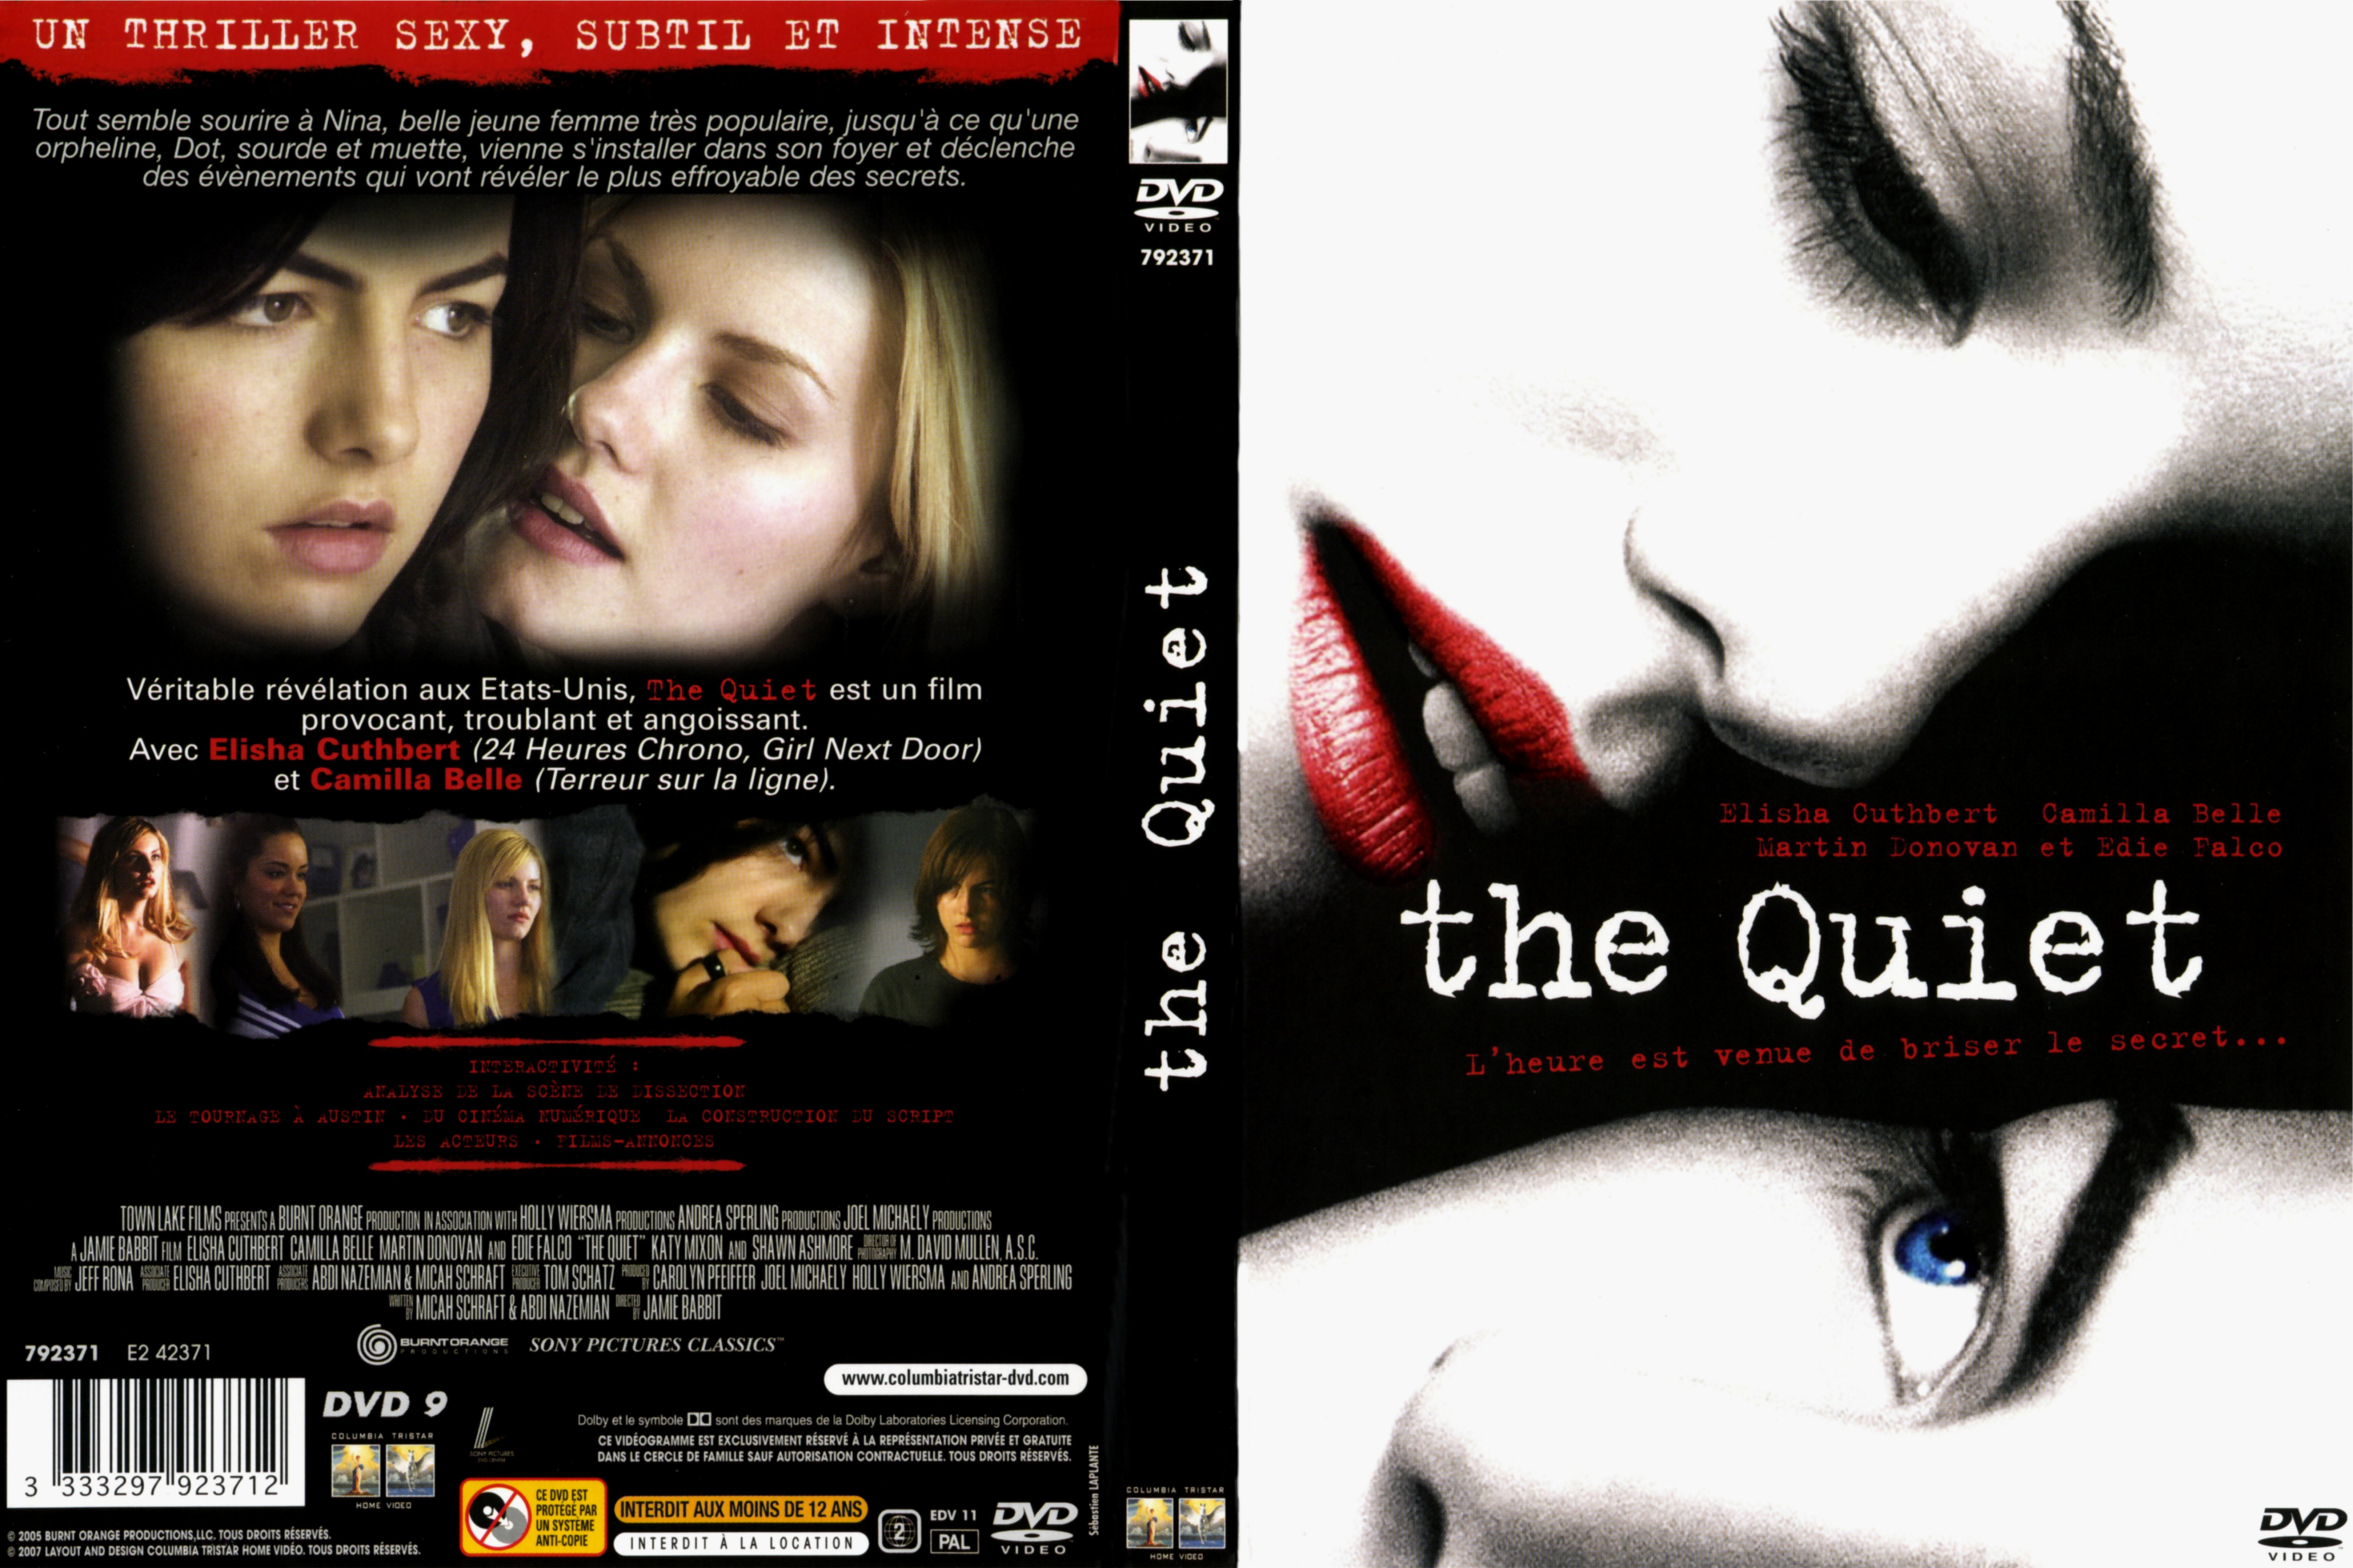 Jaquette DVD The quiet v2